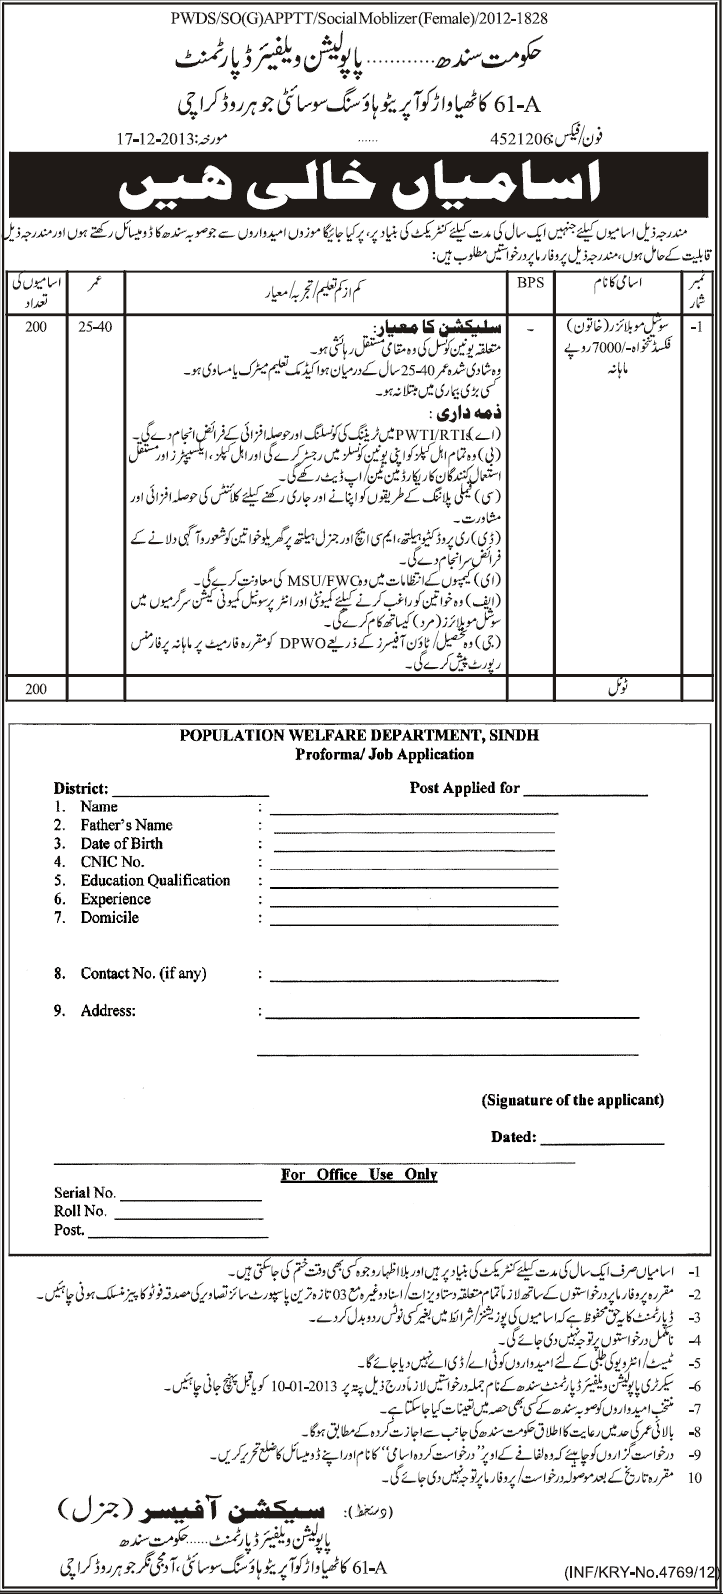 Population Welfare Department Sindh Jobs 2013 Social Mobilizers Application Form Proforma